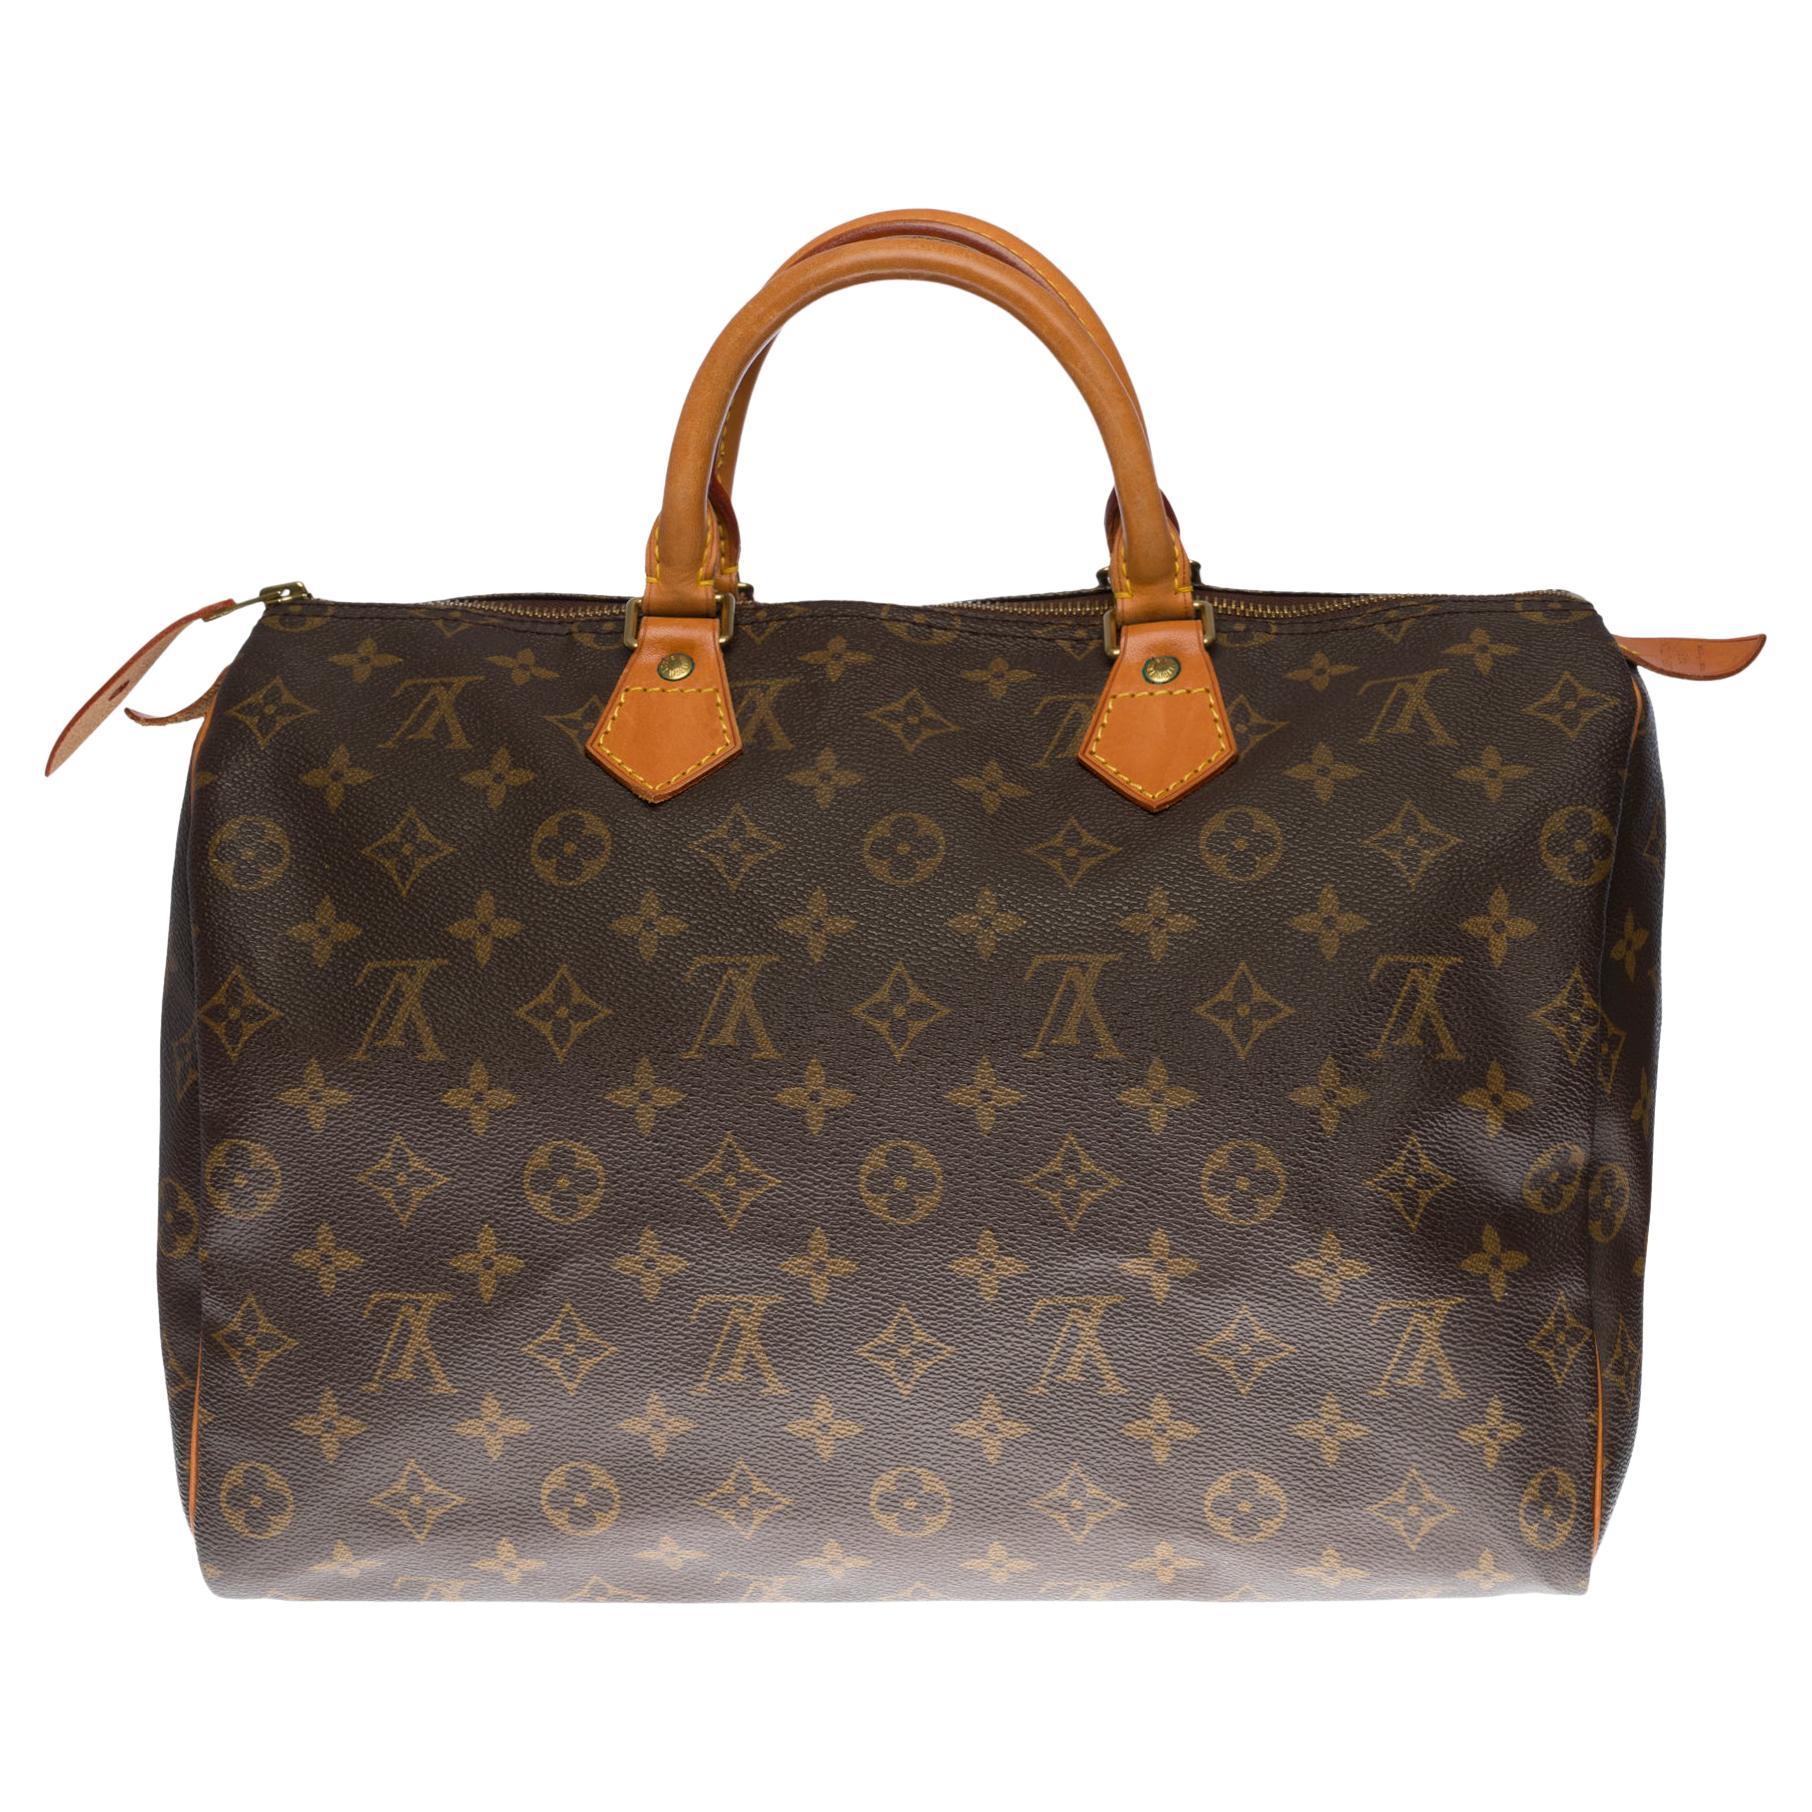 Louis Vuitton Speedy 35 handbag in brown canvas For Sale